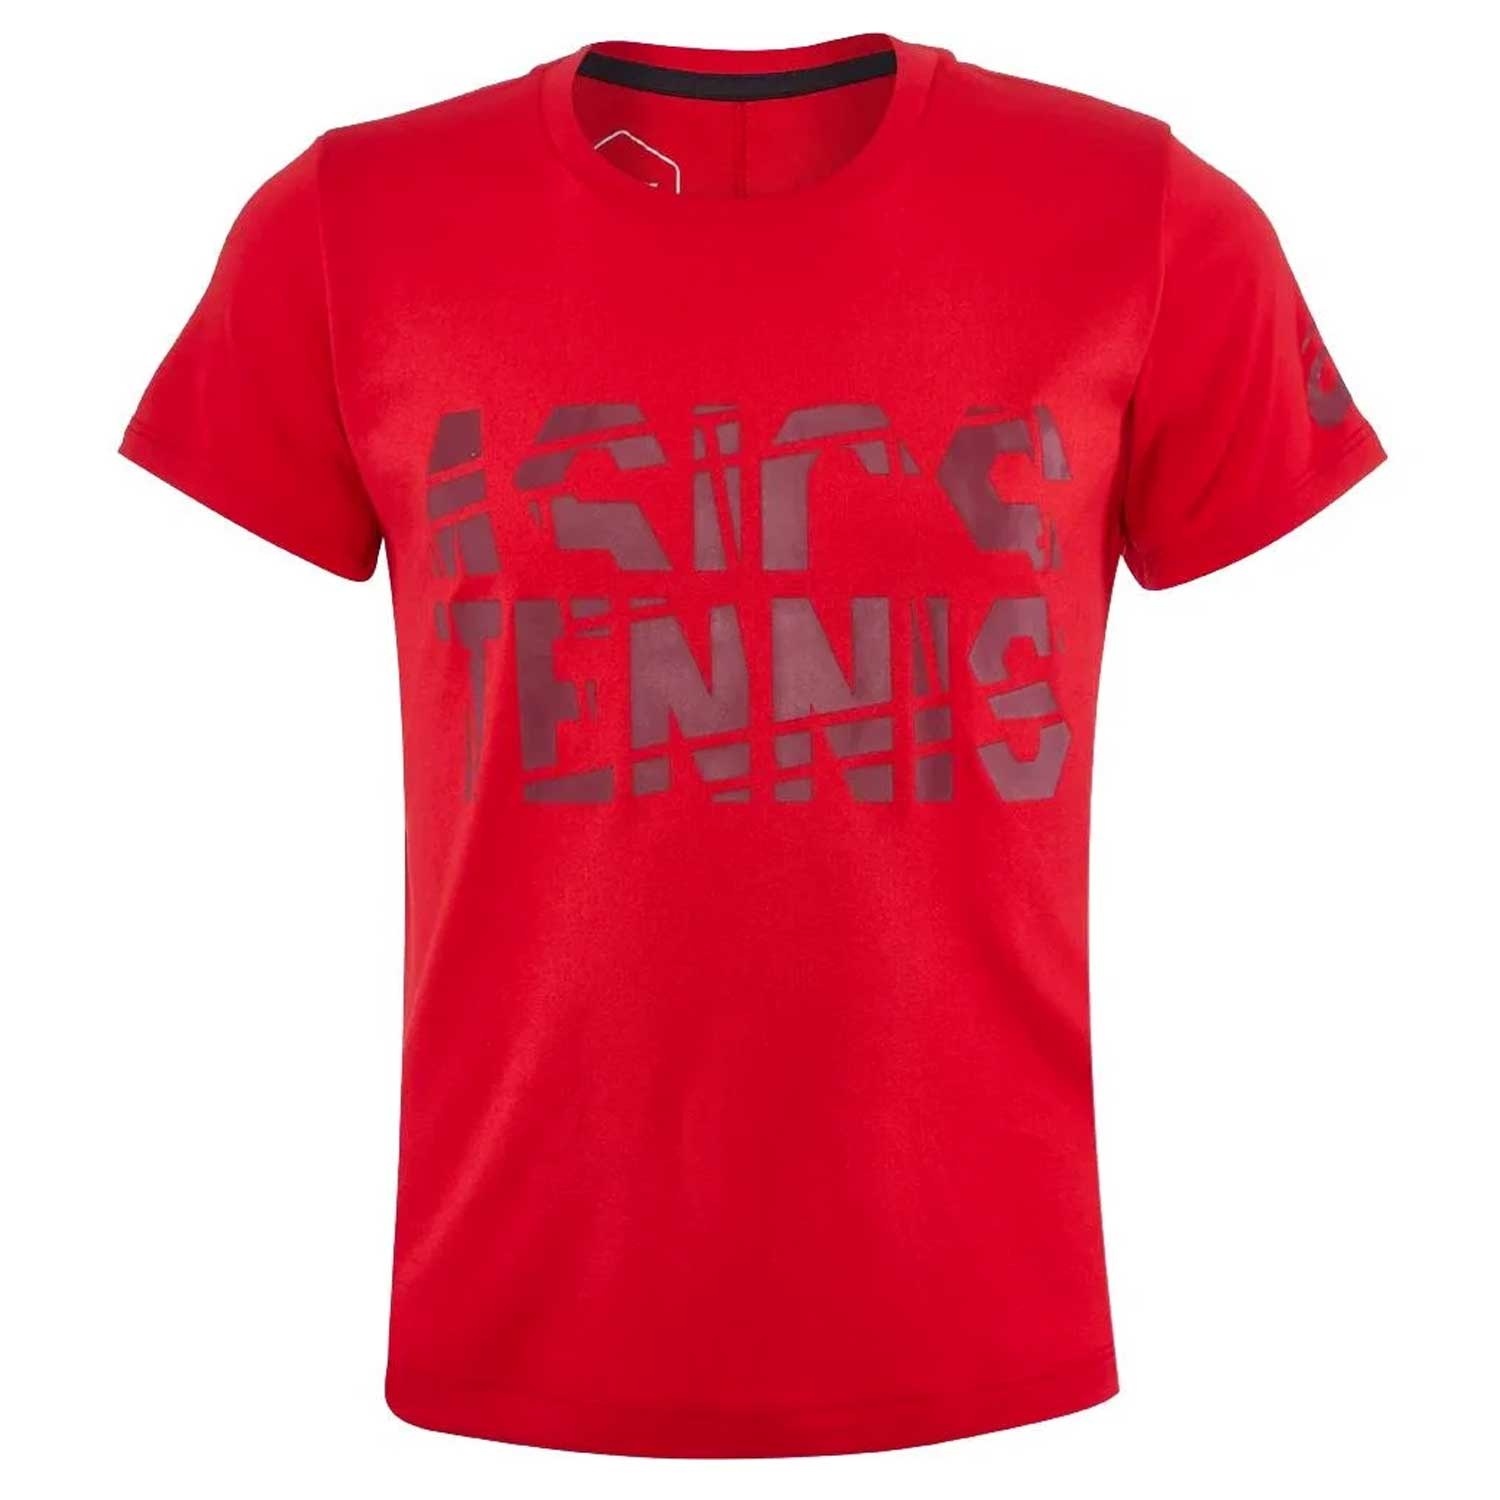 Asics Gpx T-shirt Boy Red